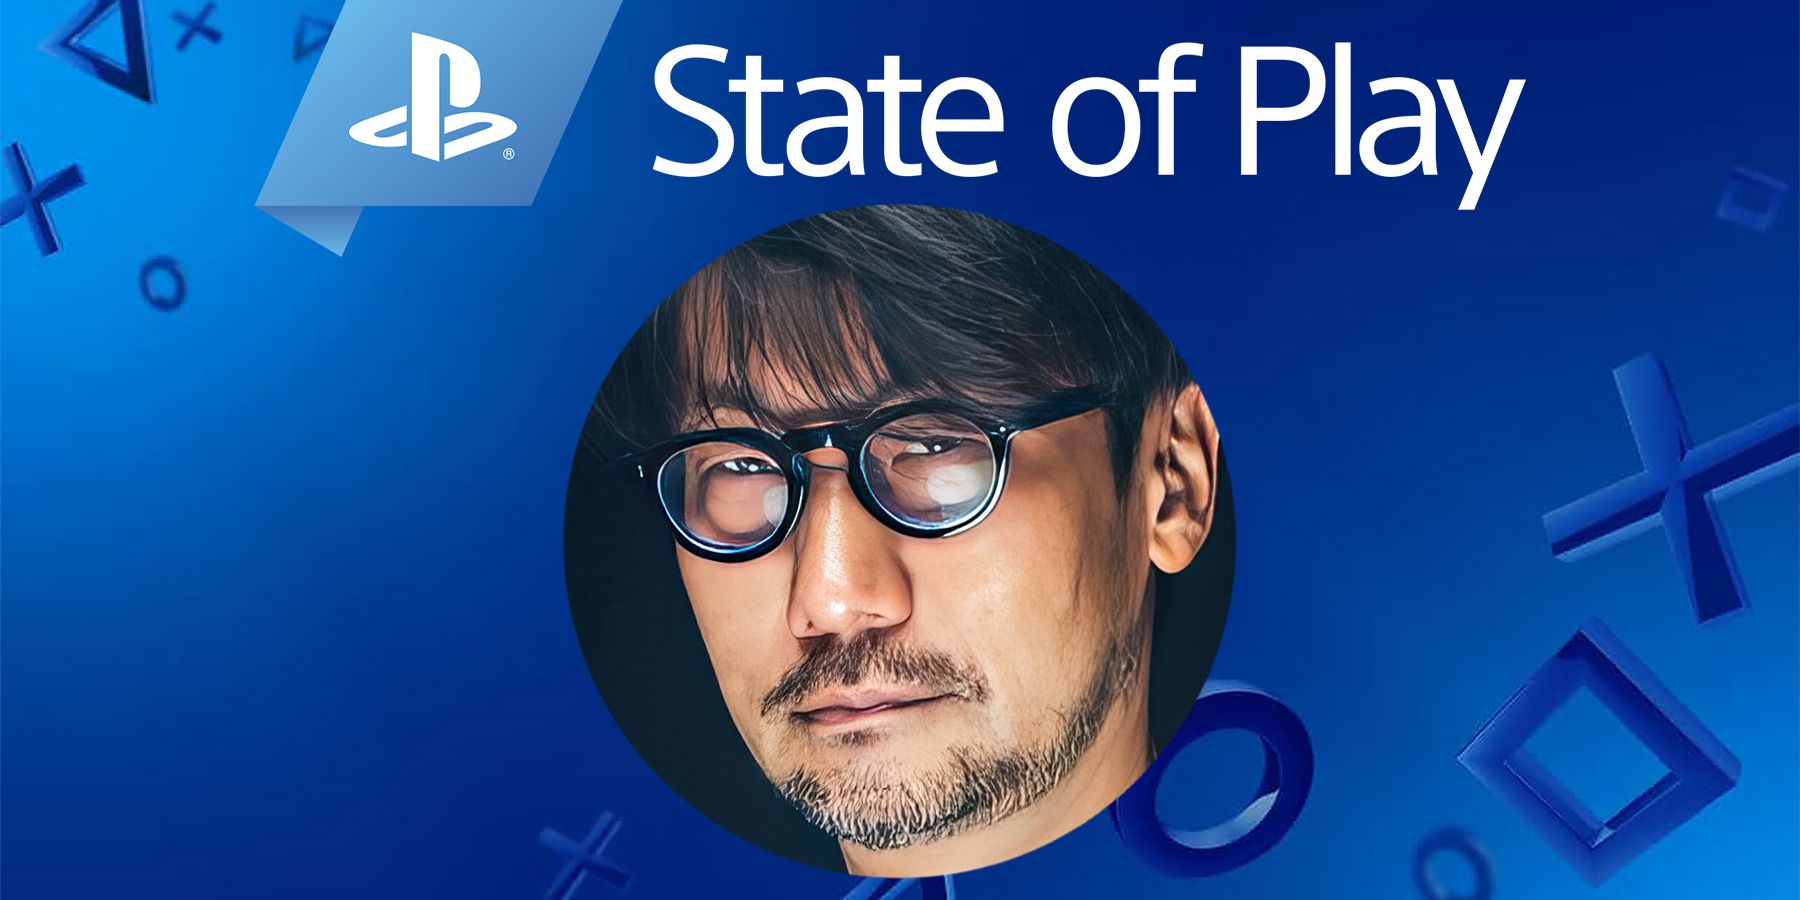 Hideo Kojima Twitter profile pic below PlayStation State of Play logo